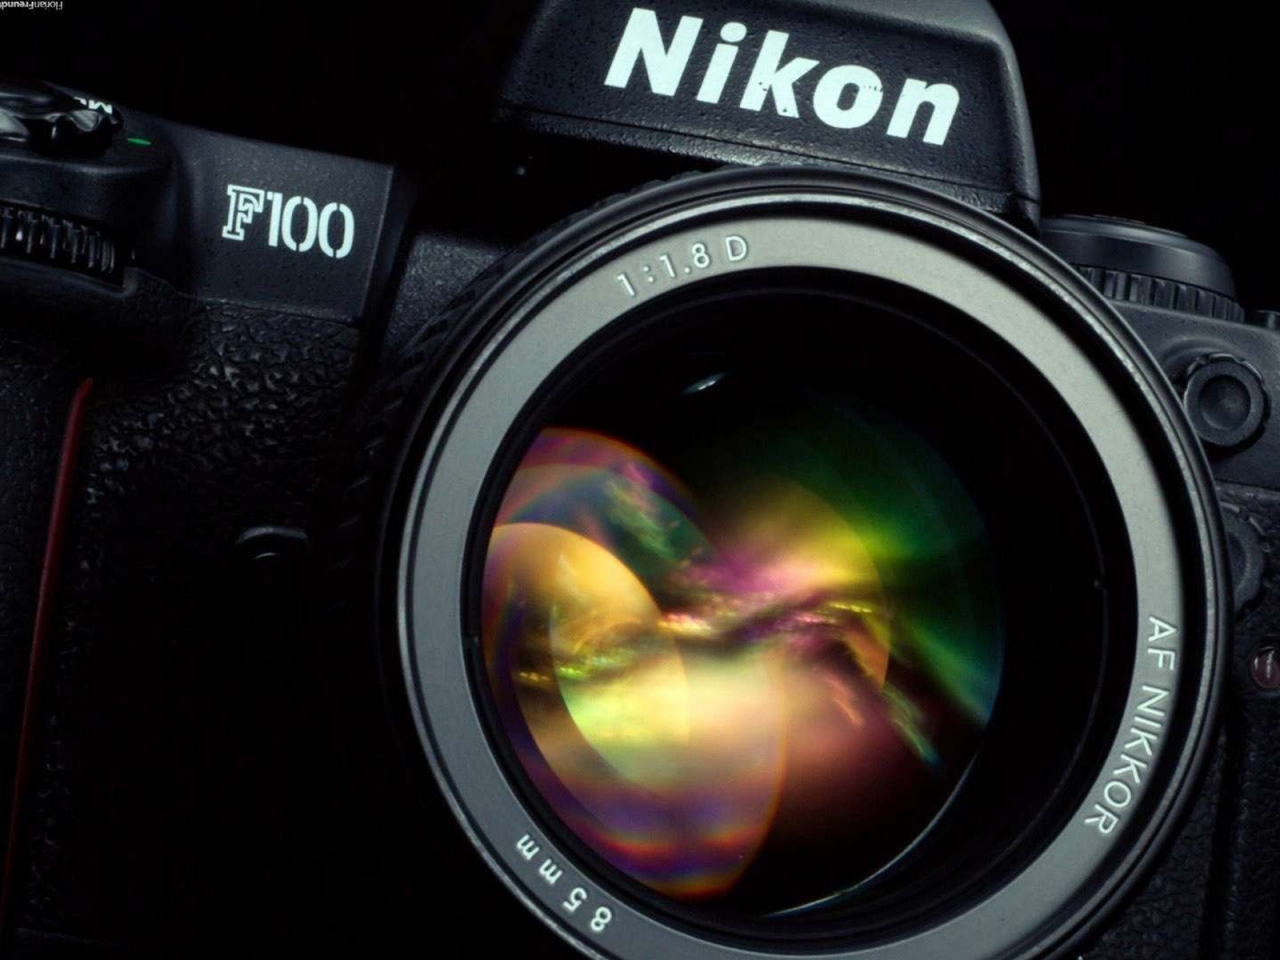 Nikon F100 for 1280 x 960 resolution